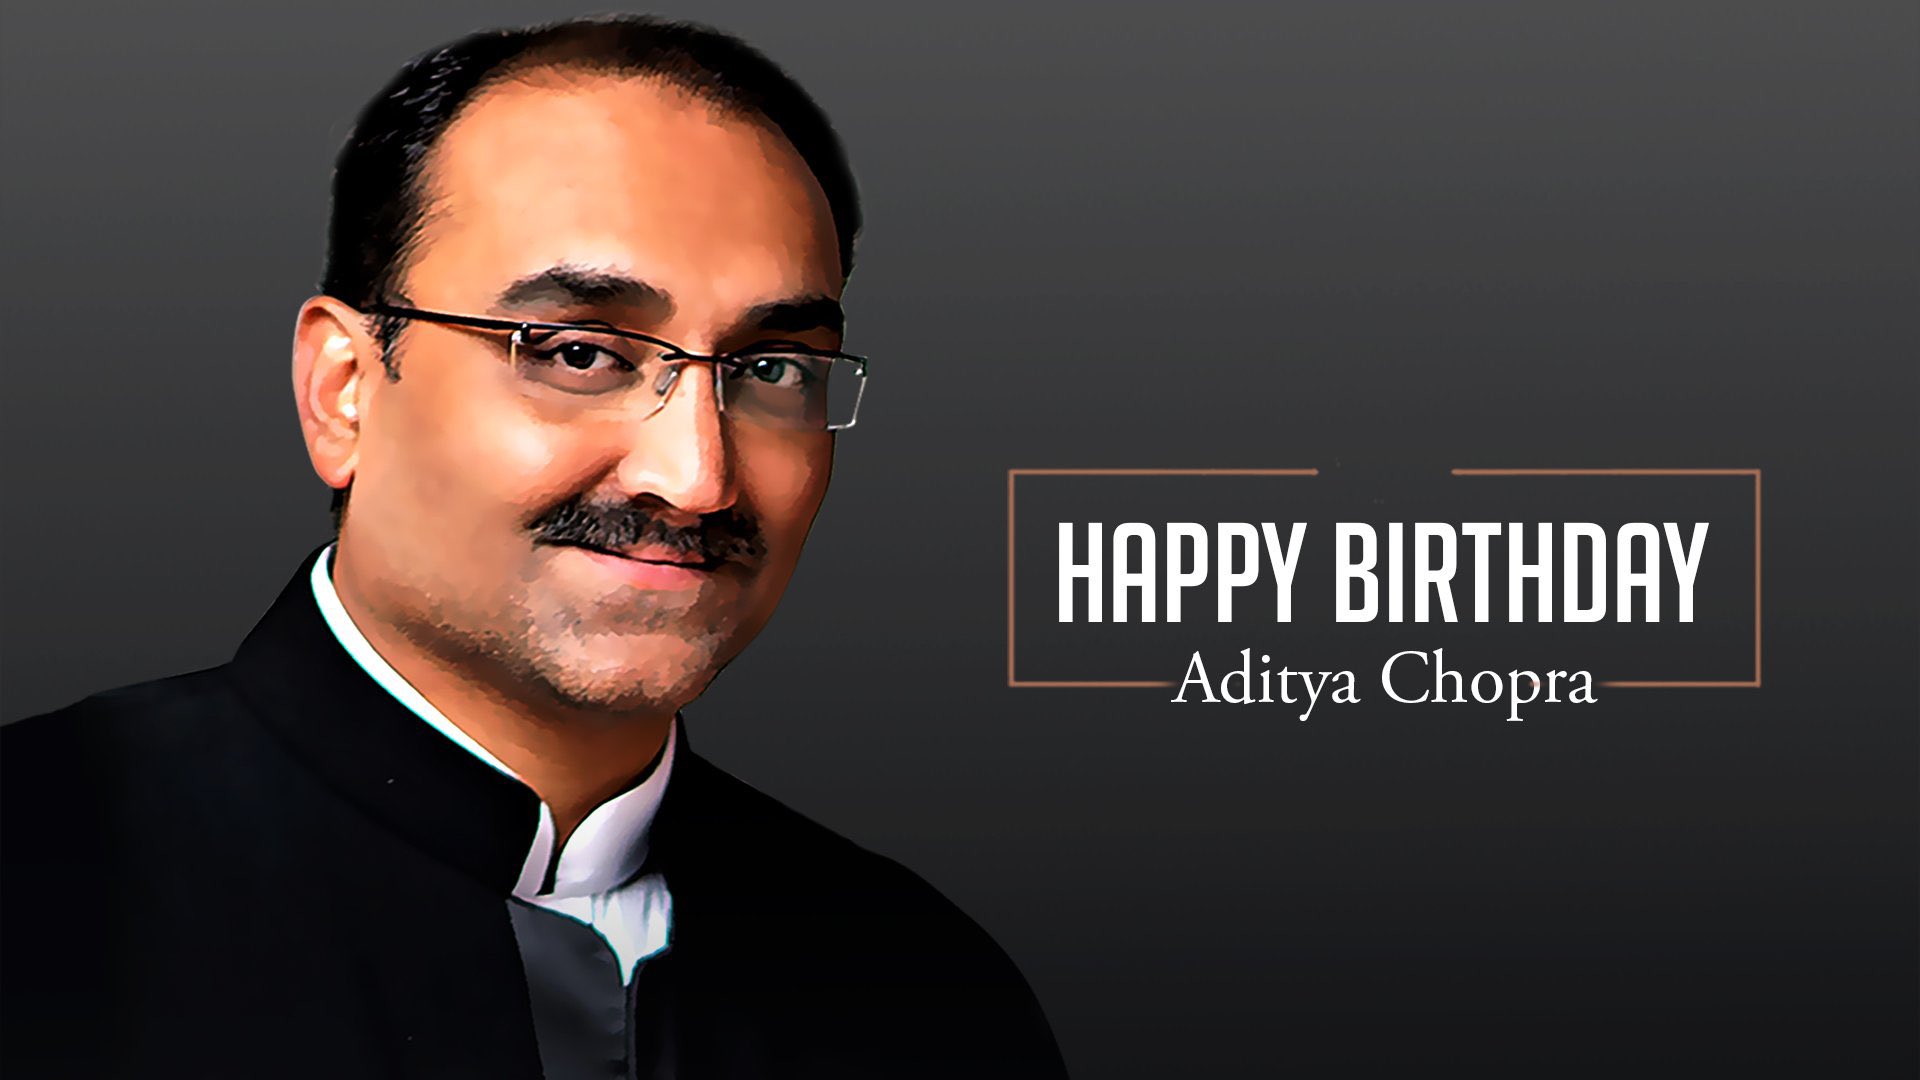 Wishes the ace filmmaker Aditya Chopra a very Happy Birthday!  